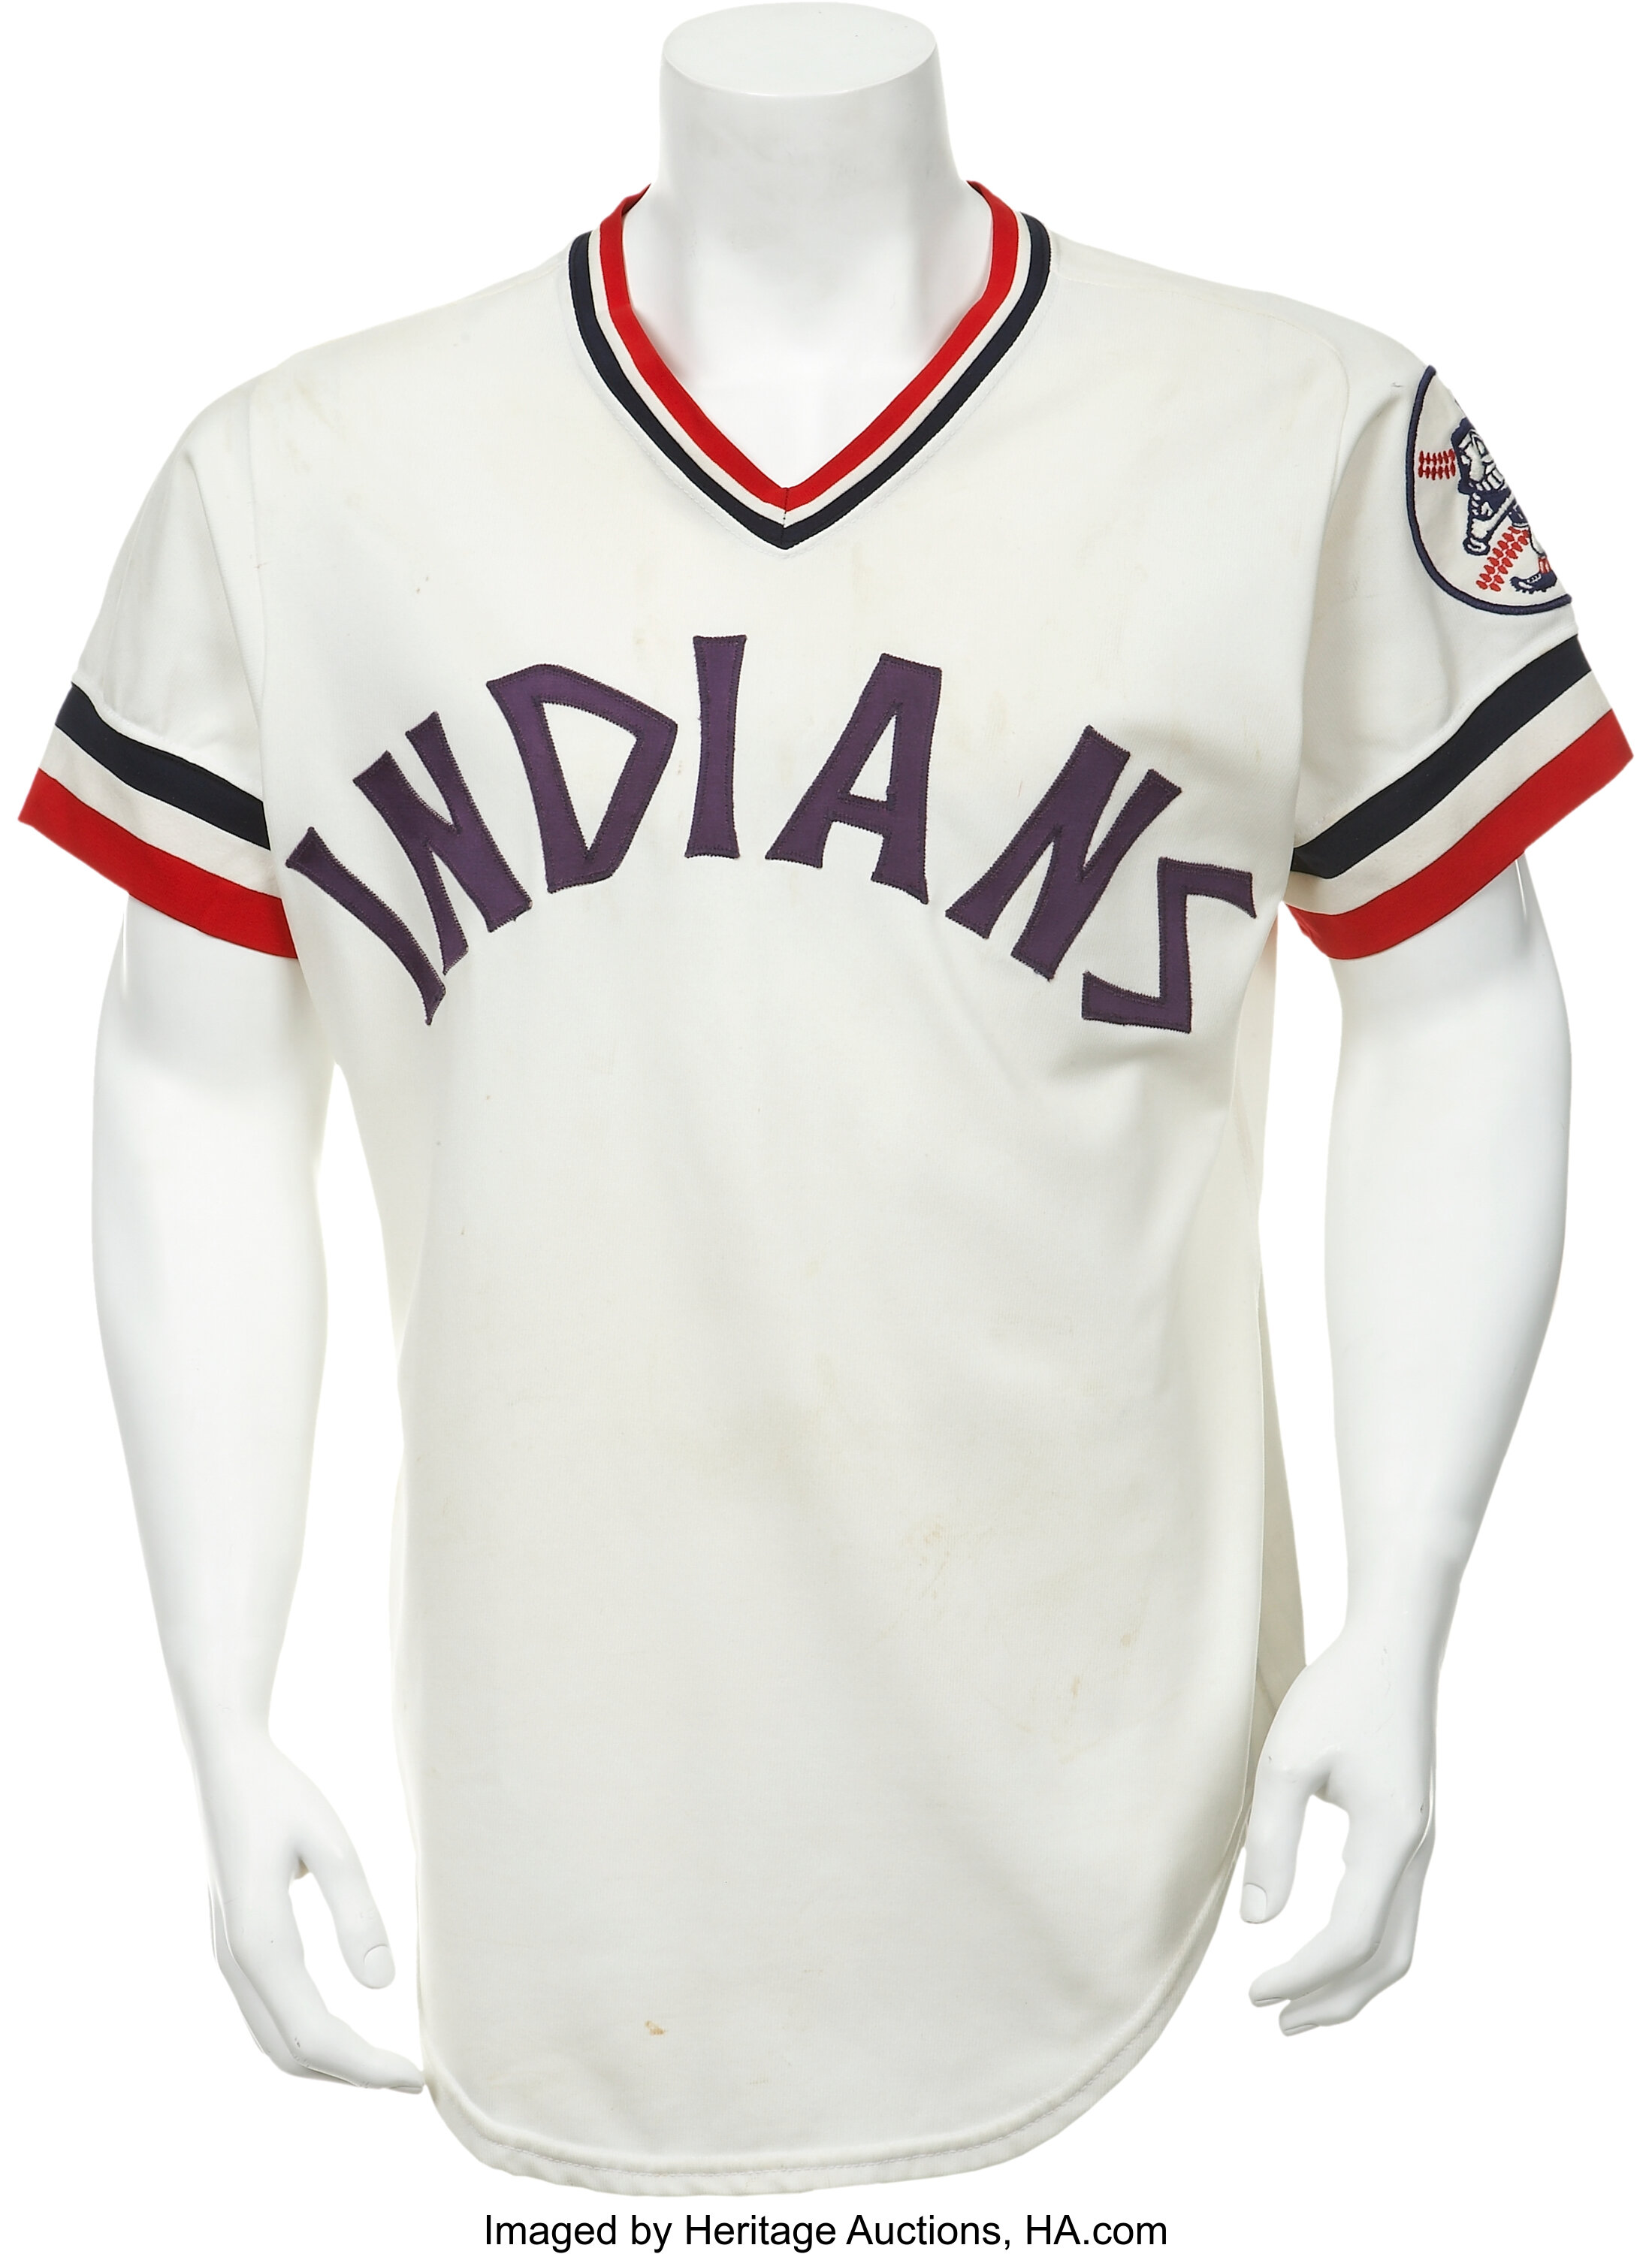 cleveland indians old jerseys